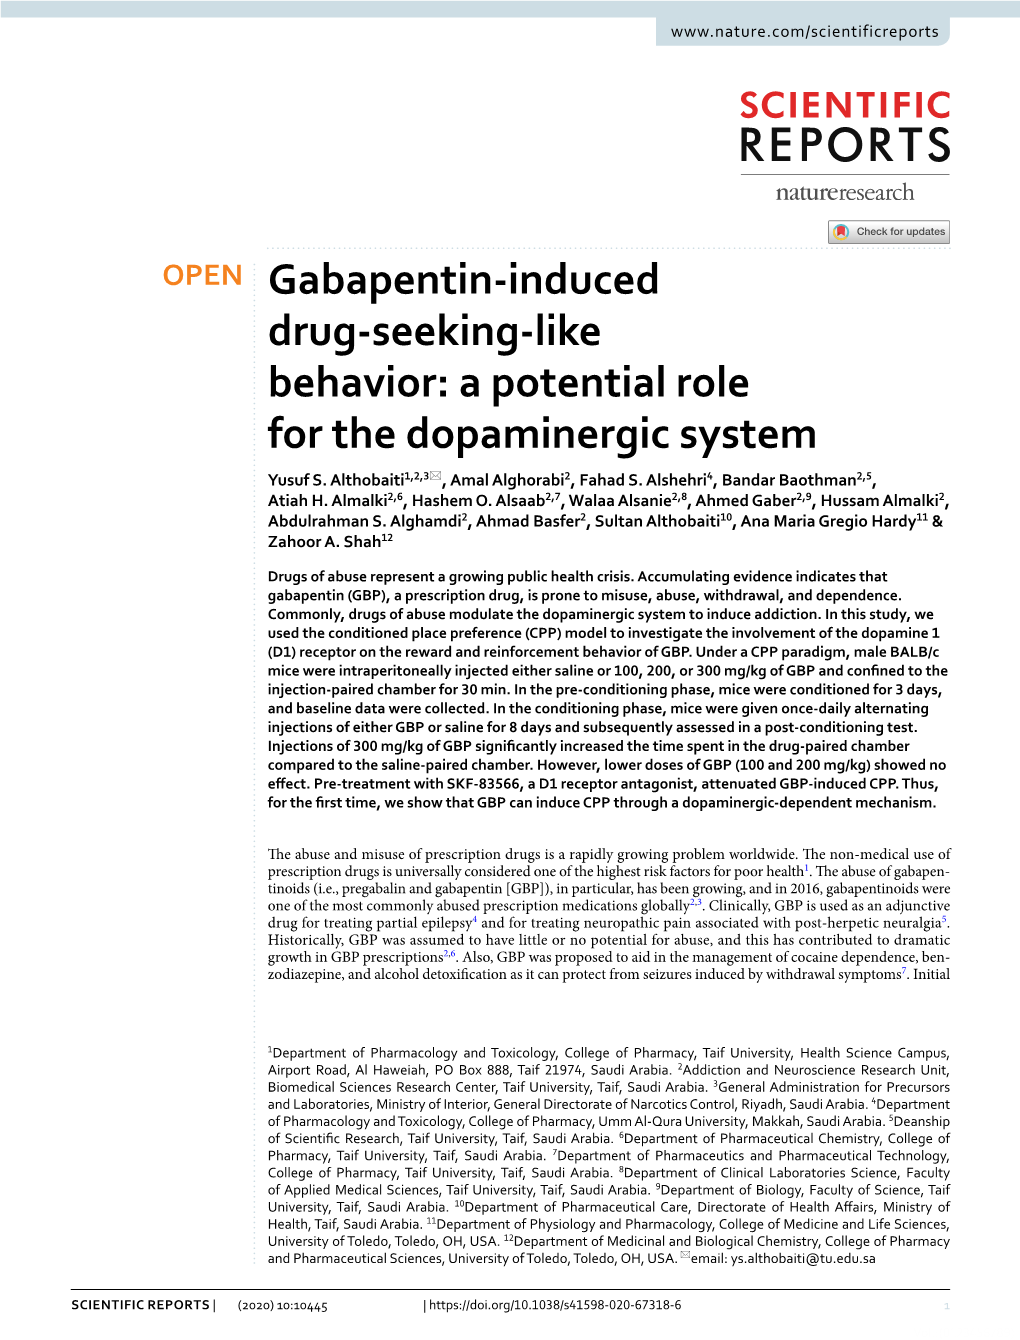 Gabapentin-Induced Drug-Seeking-Like Behavior